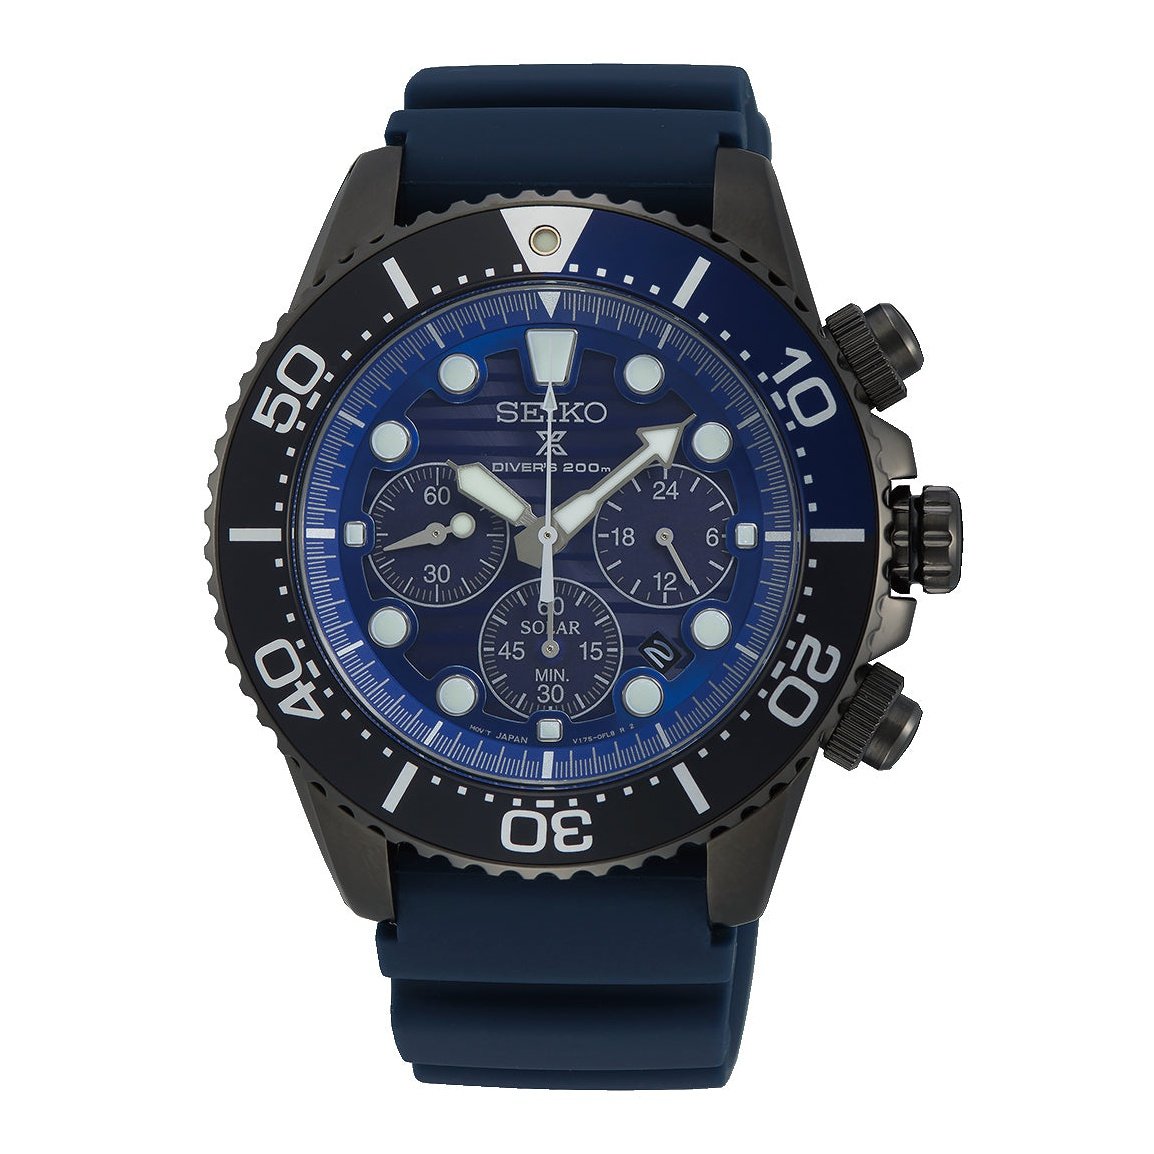 Men's Prospex Ocean Diver's 200m Chronograph Solar Sports Watch SSC701P1 Seiko